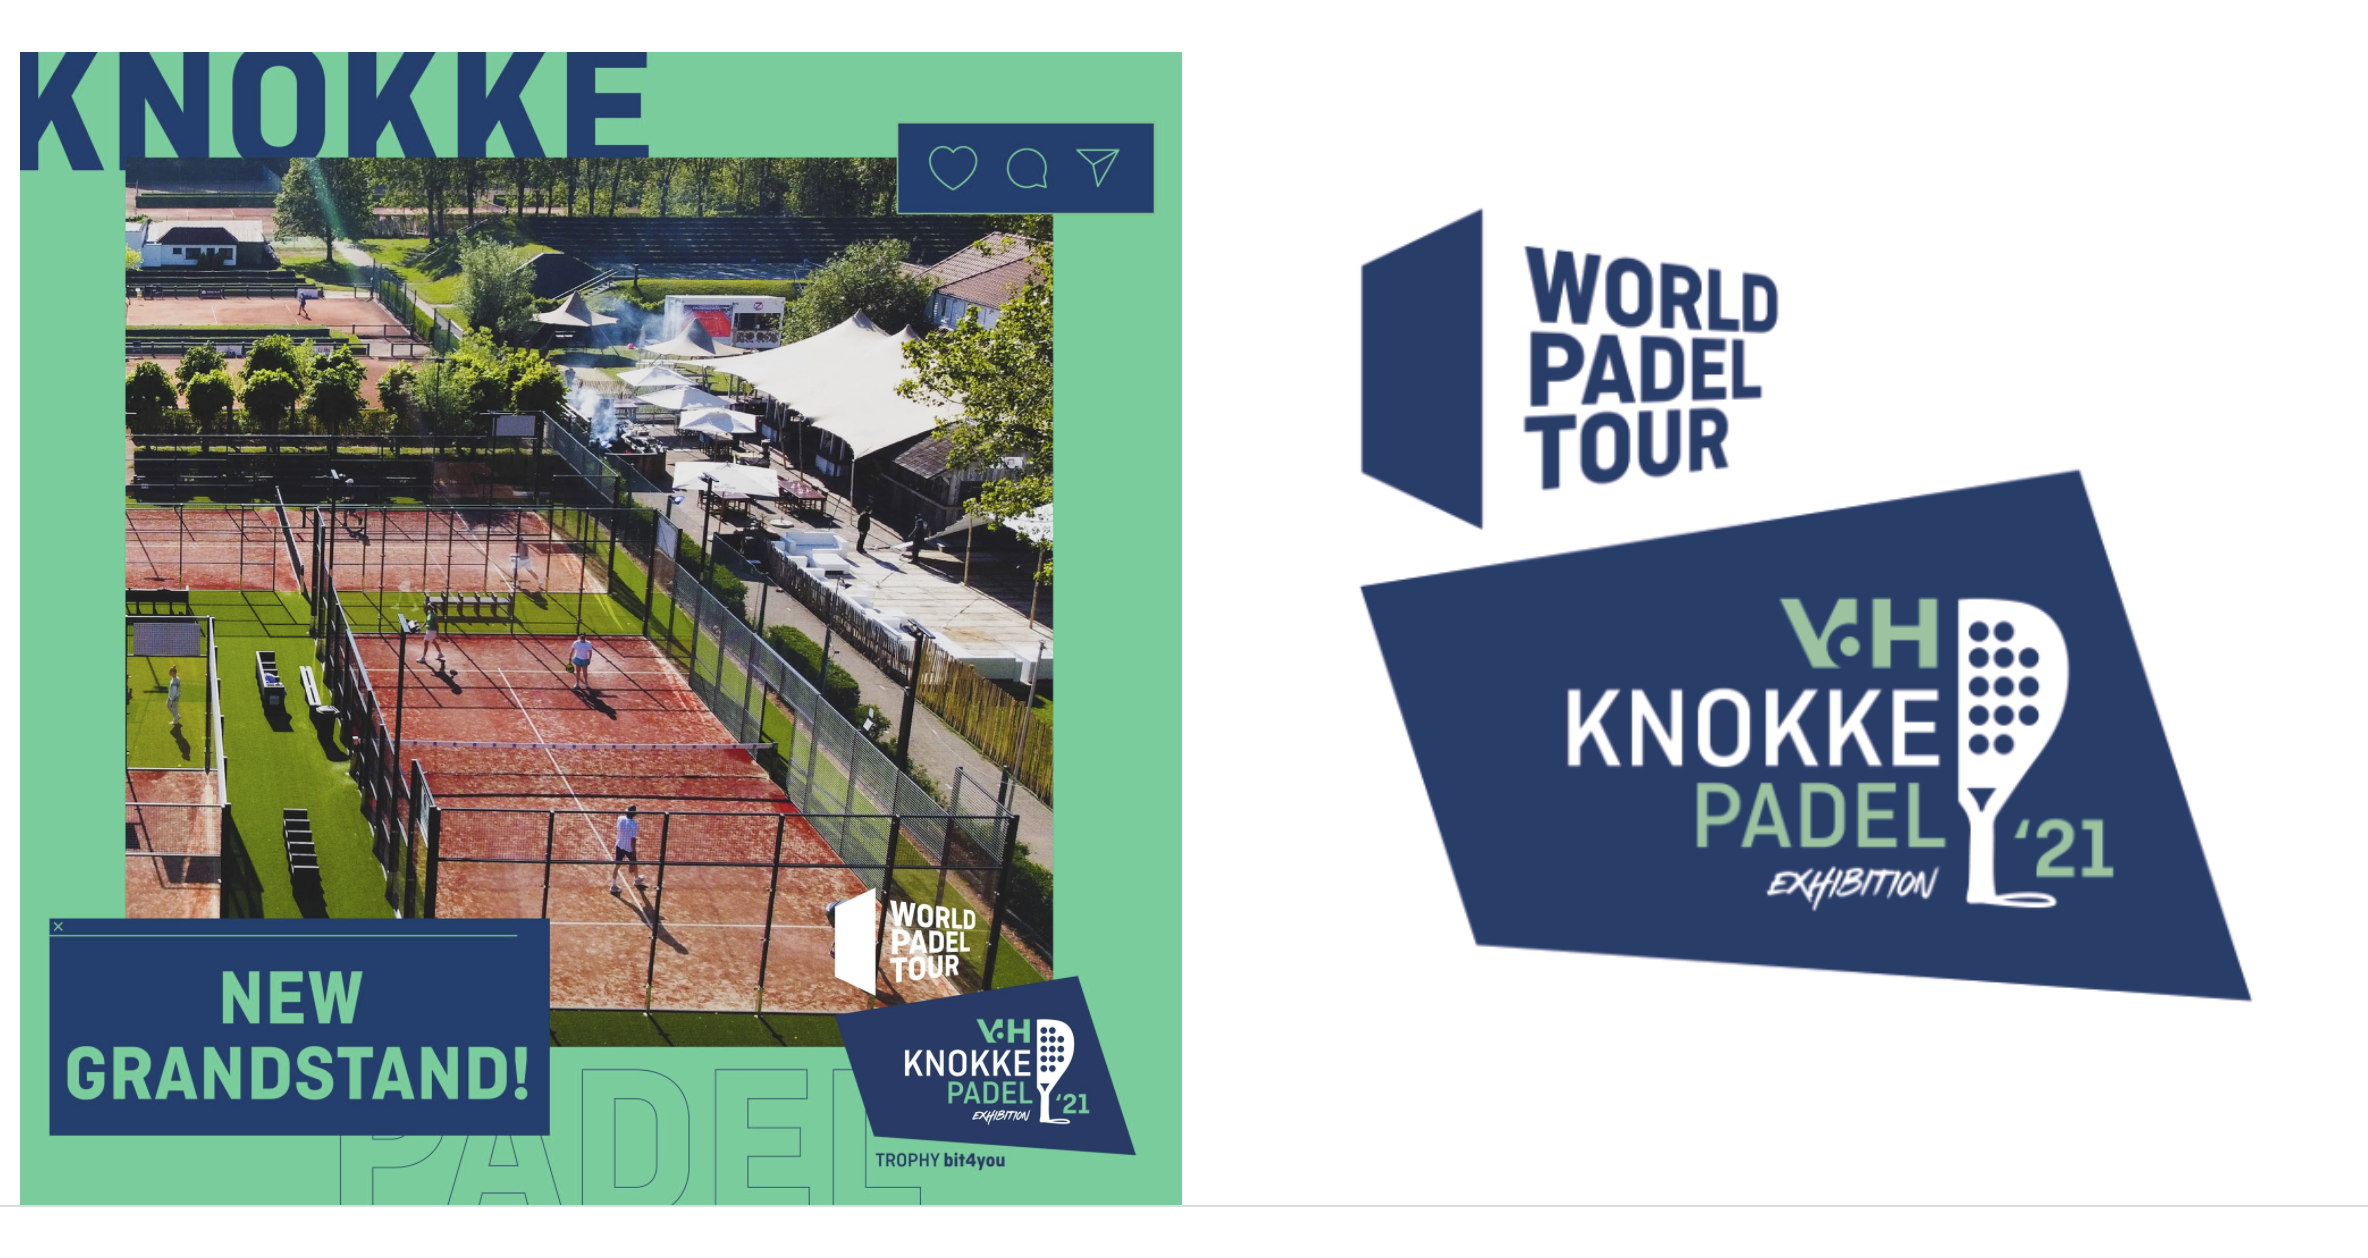 World Padel Tour Knokke 2021: it's happening!